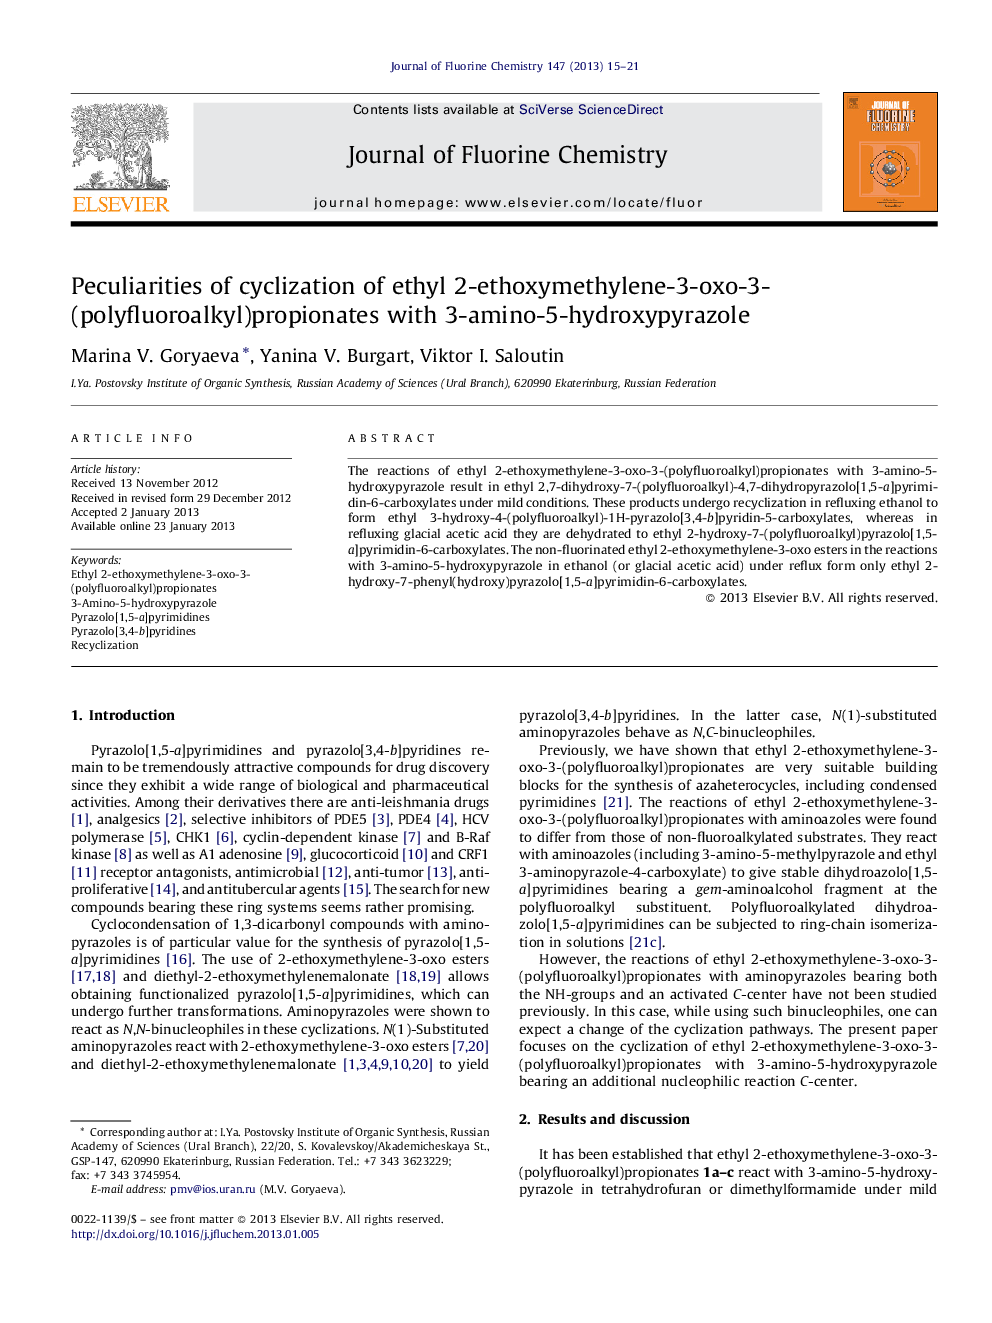 Peculiarities of cyclization of ethyl 2-ethoxymethylene-3-oxo-3-(polyfluoroalkyl)propionates with 3-amino-5-hydroxypyrazole